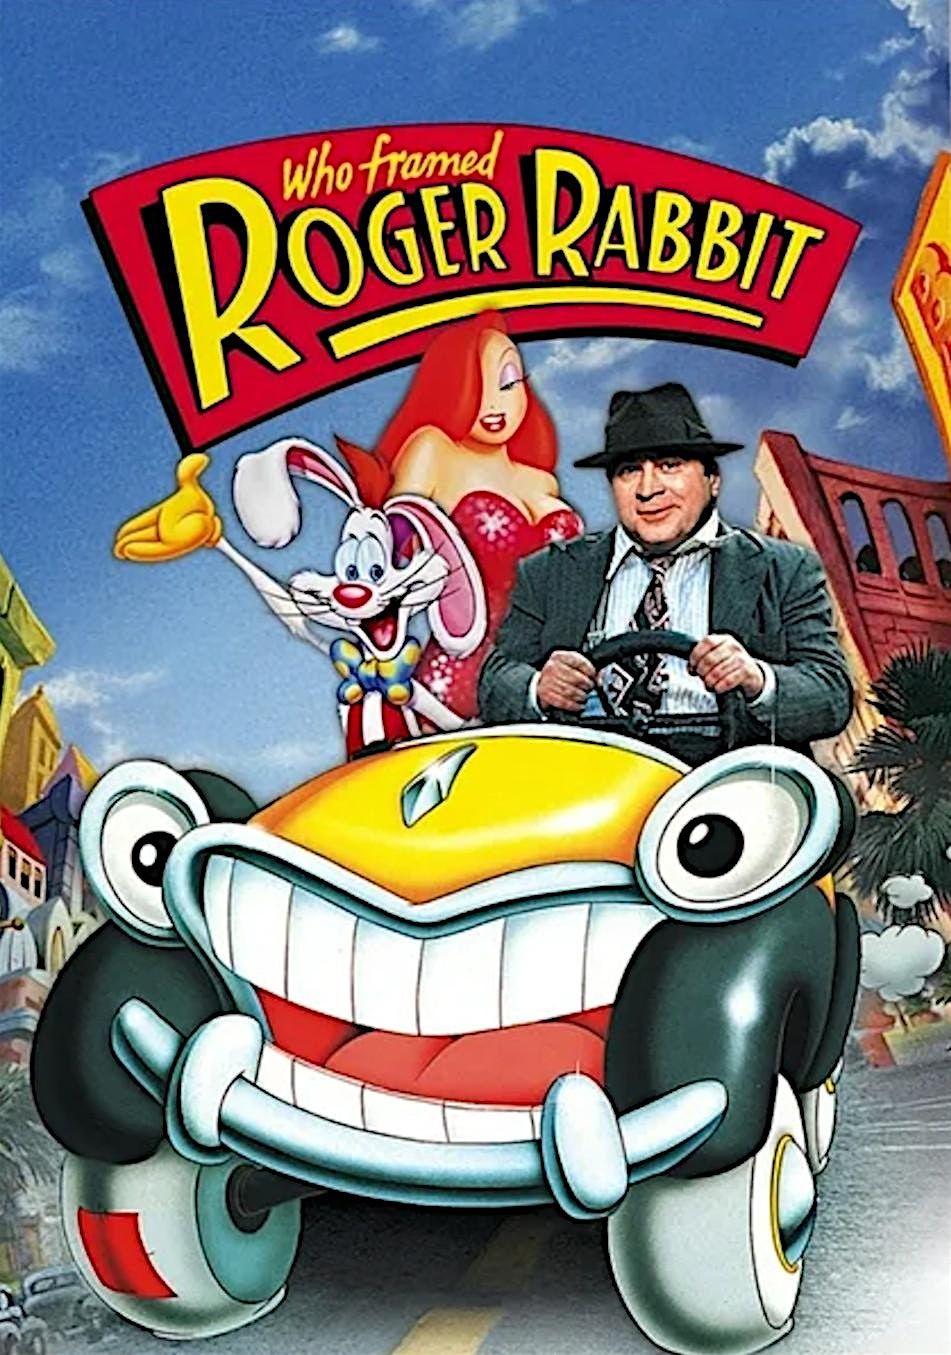 Roger Rabbit! Comedy and cartoon mayhem at the Historic Select Theater!